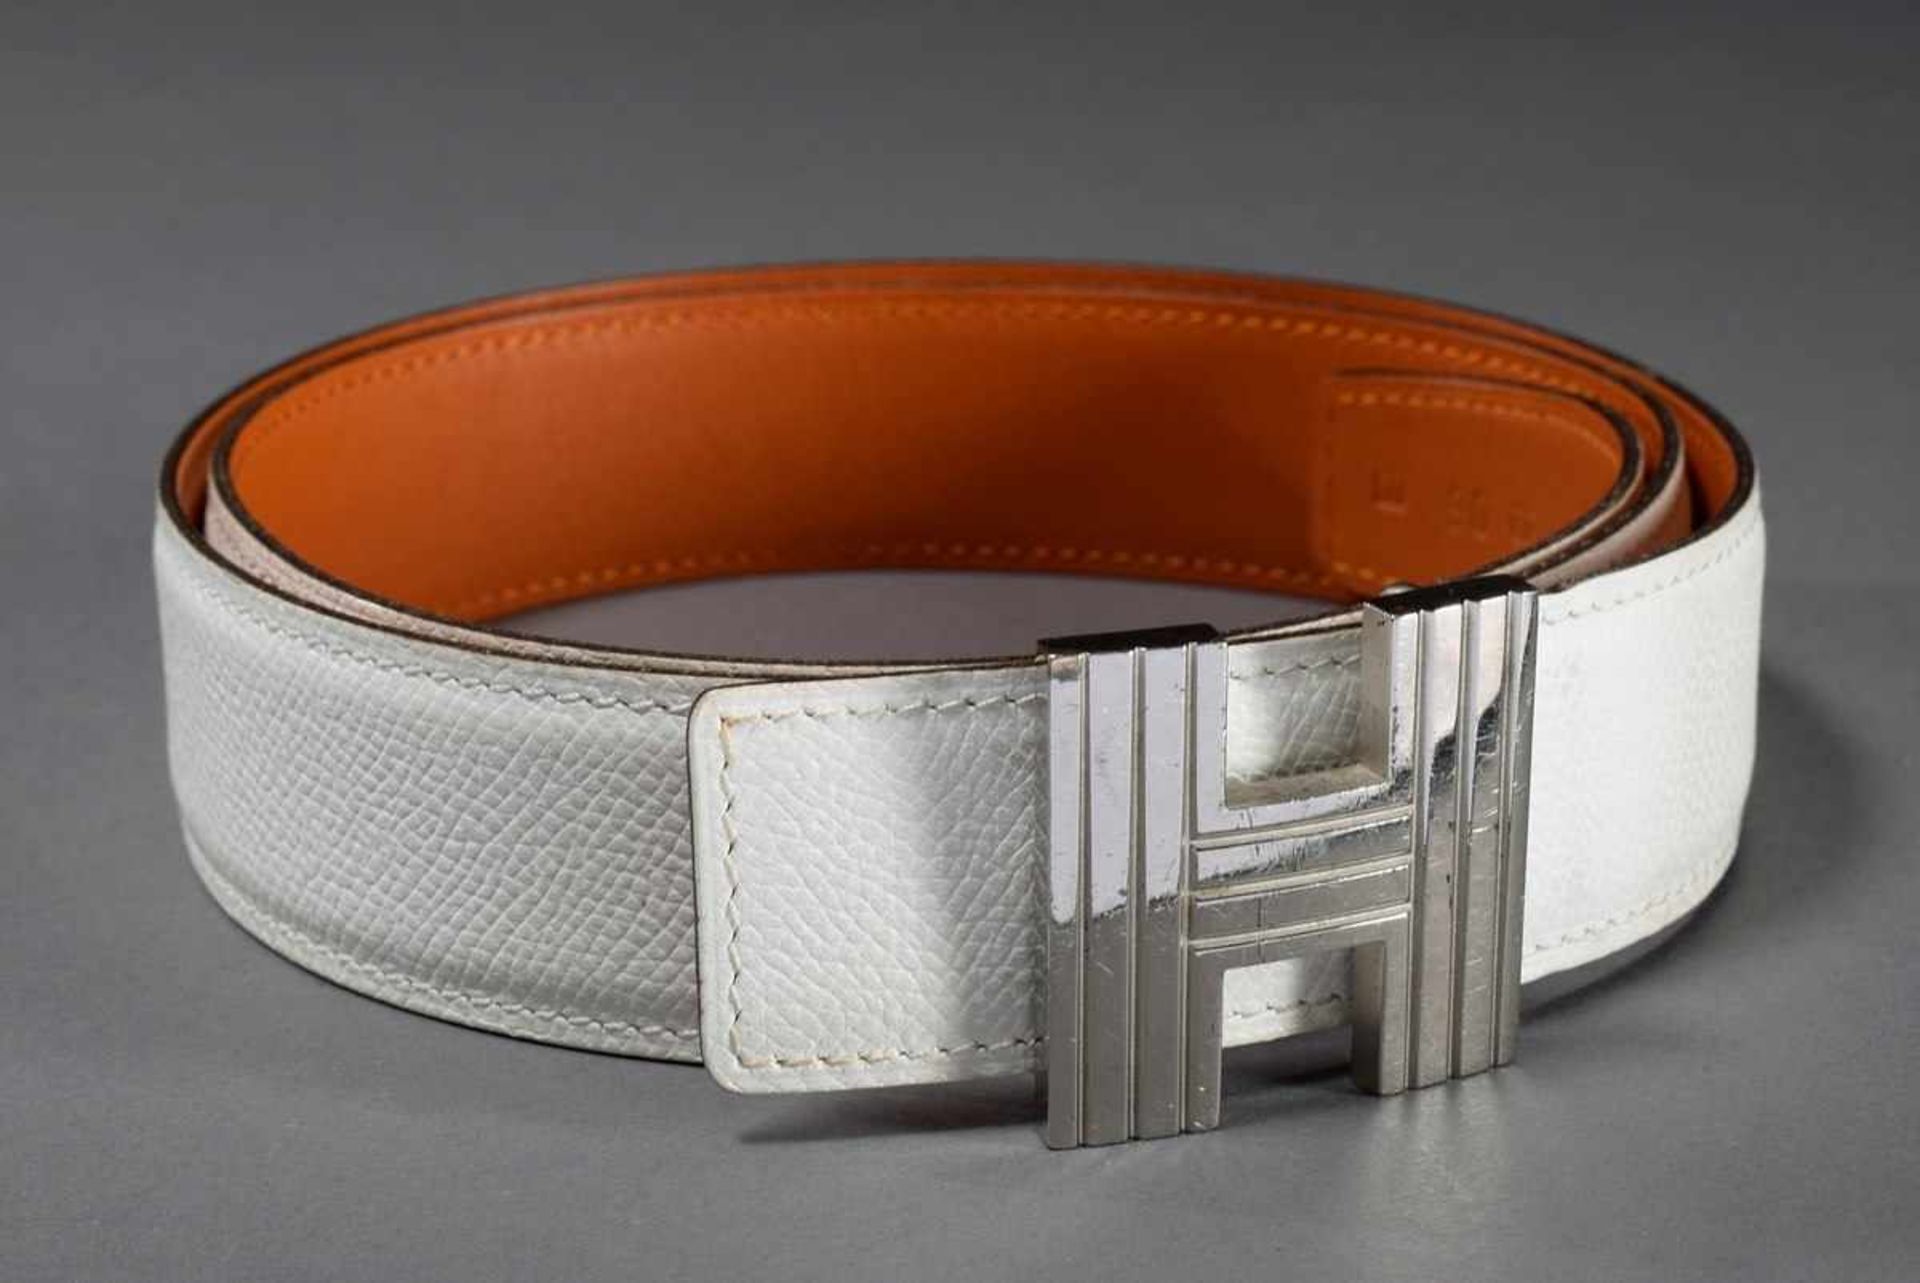 Hermès "Constance" belt with silver "H" buckle, white, 2006, l. 90cm, w. 3cm, original bag and